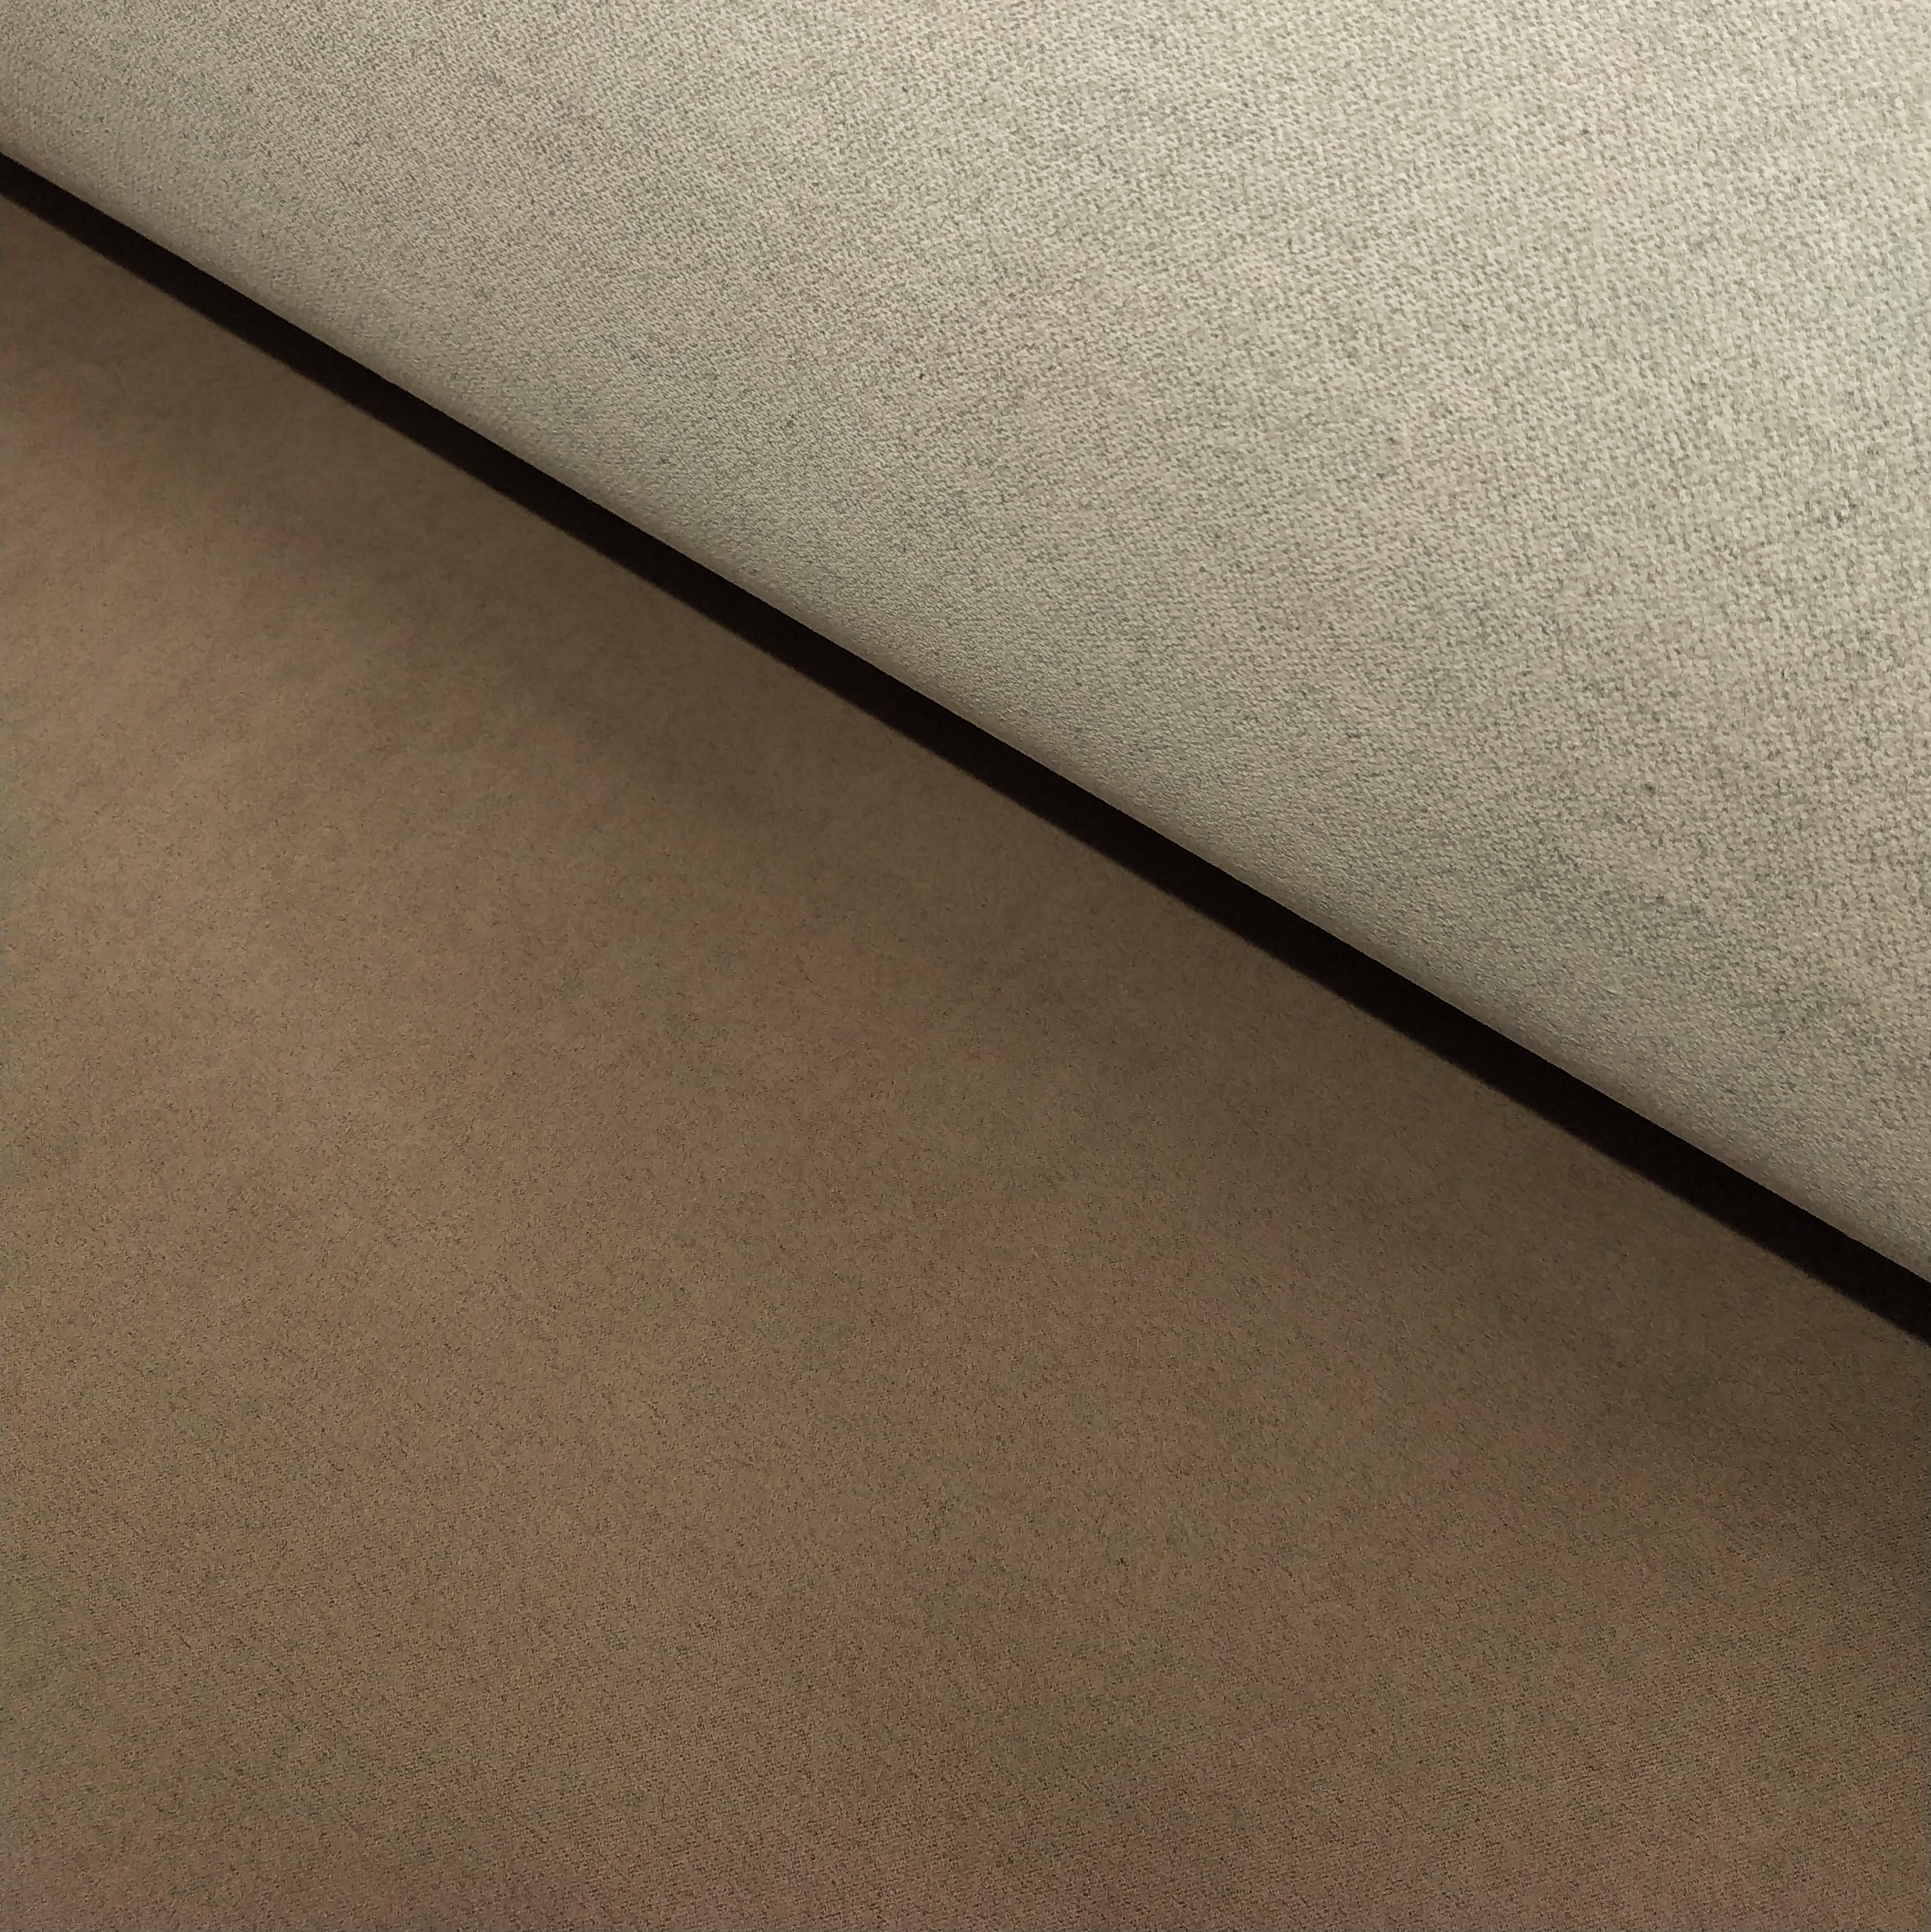 Upholstery fabric Gavdos - light brown/taupe